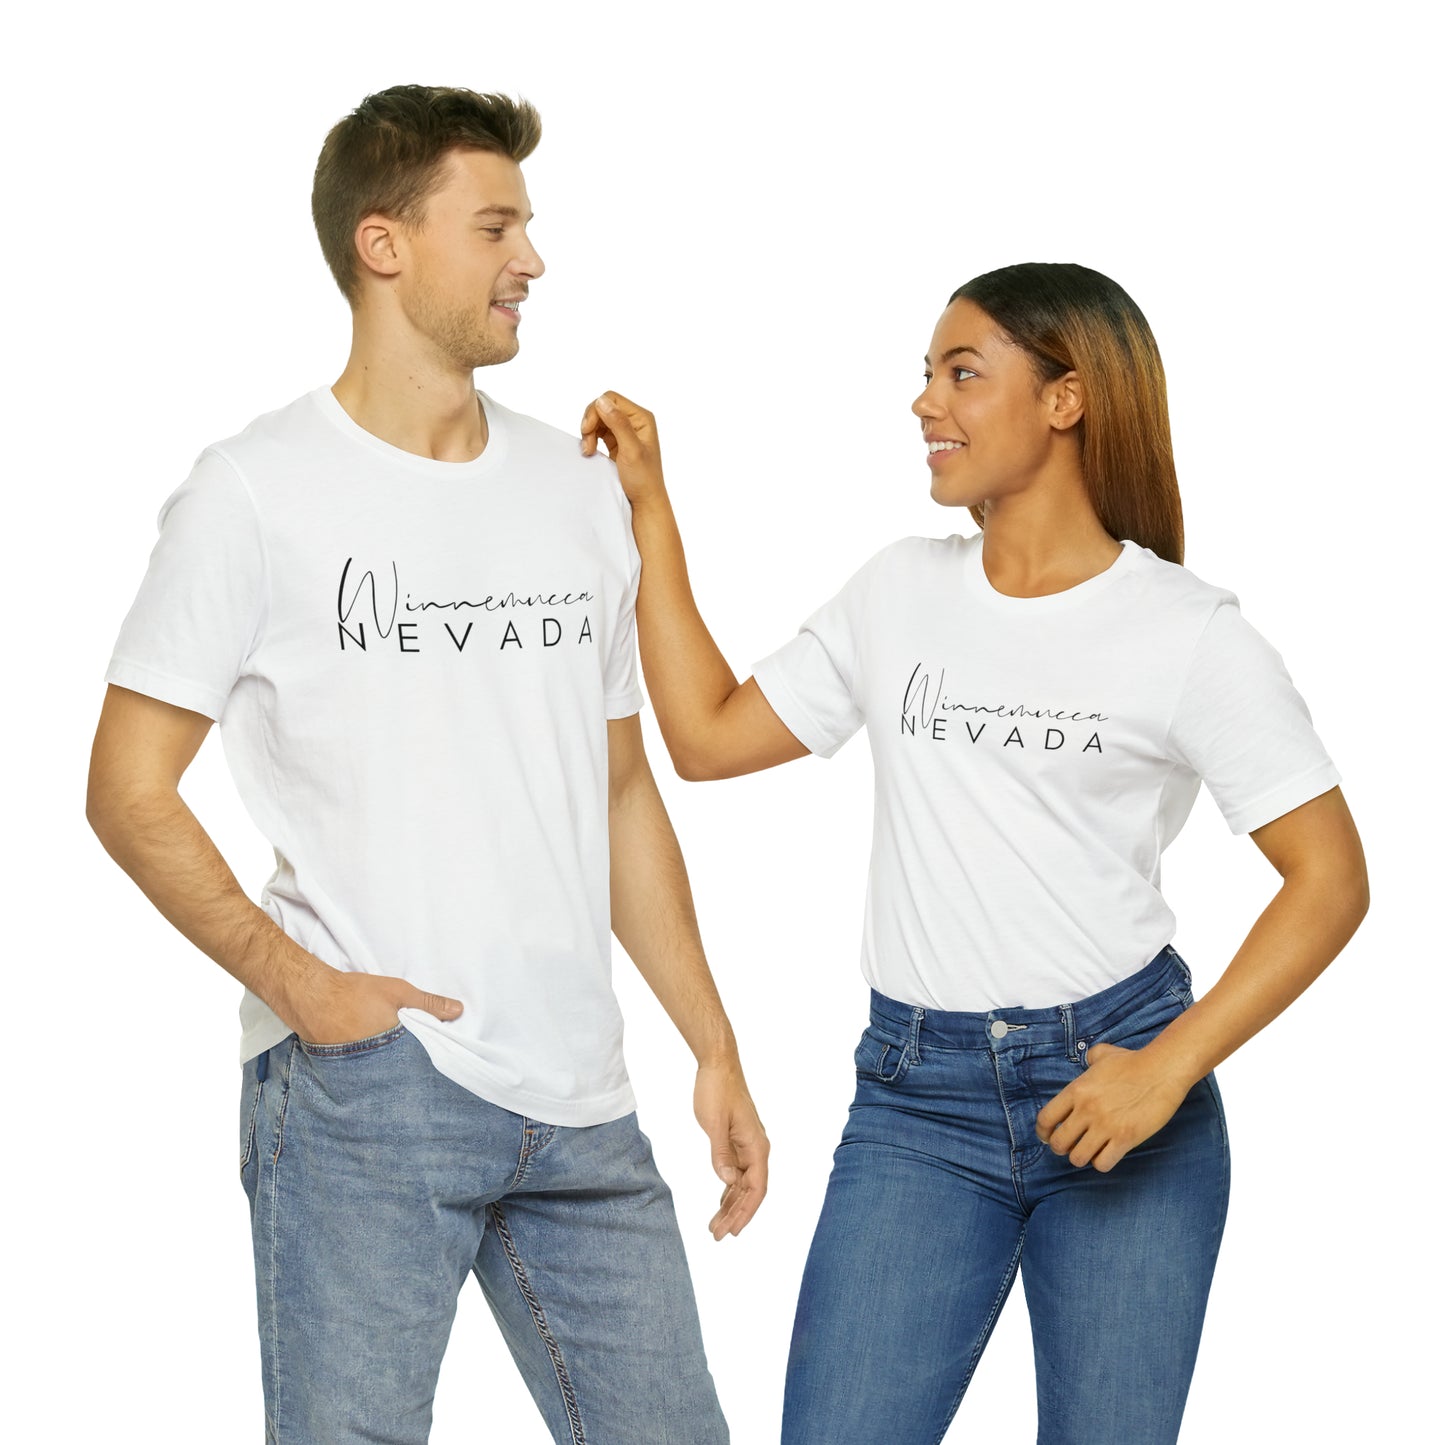 Winnemucca Nevada | T-shirt | Nevada Pride | Home Means Nevada